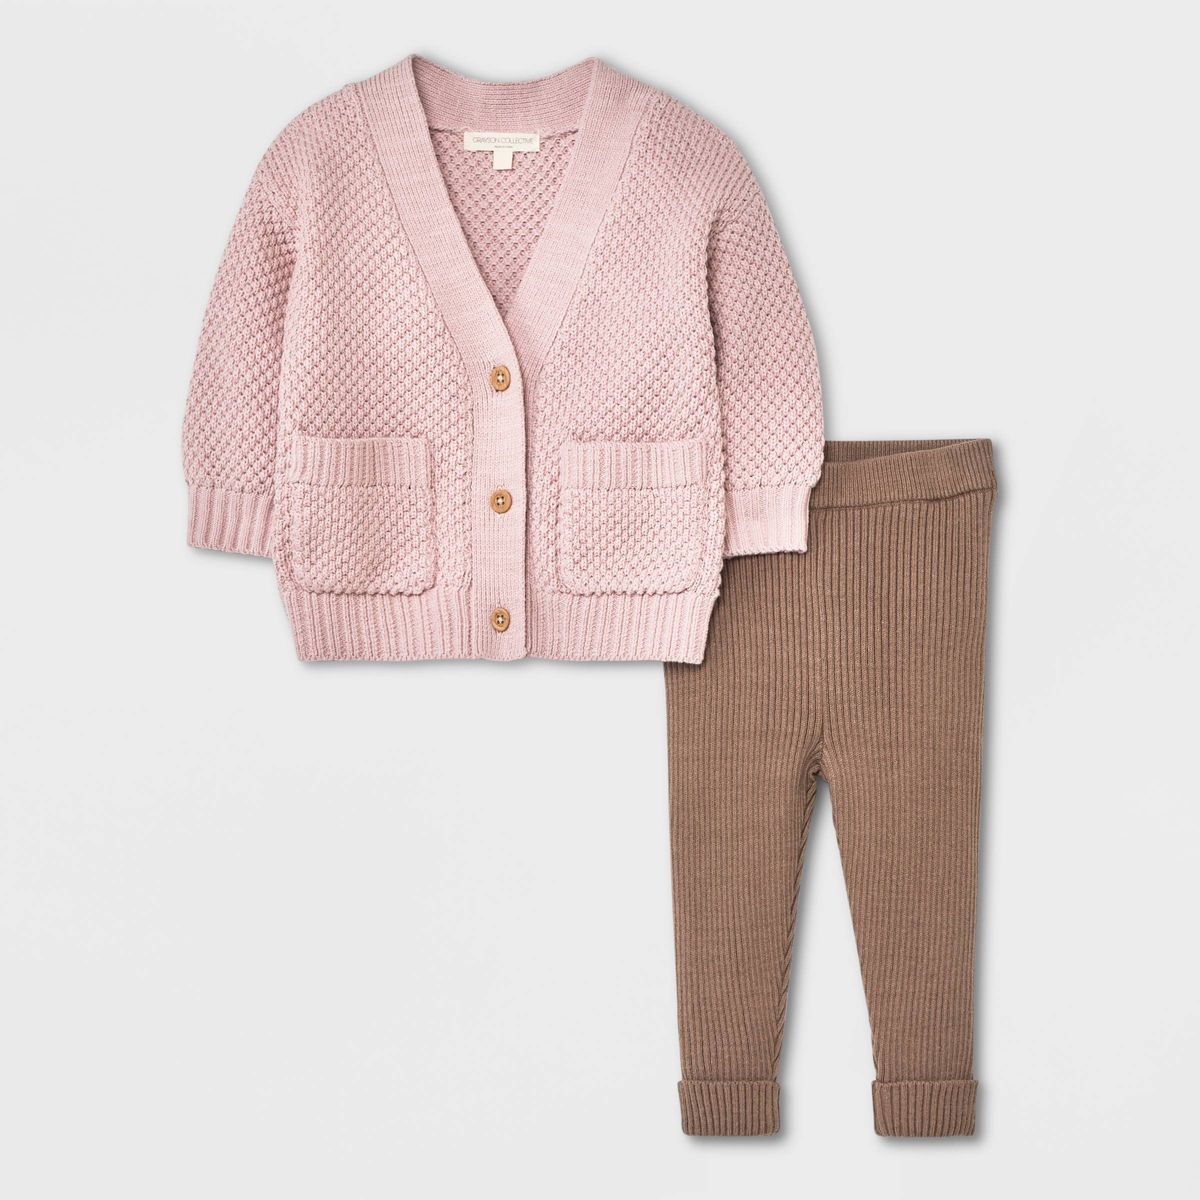 Grayson Collective Baby Girls' Cardigan & Ribbed Leggings Set - Light Pink/Brown | Target